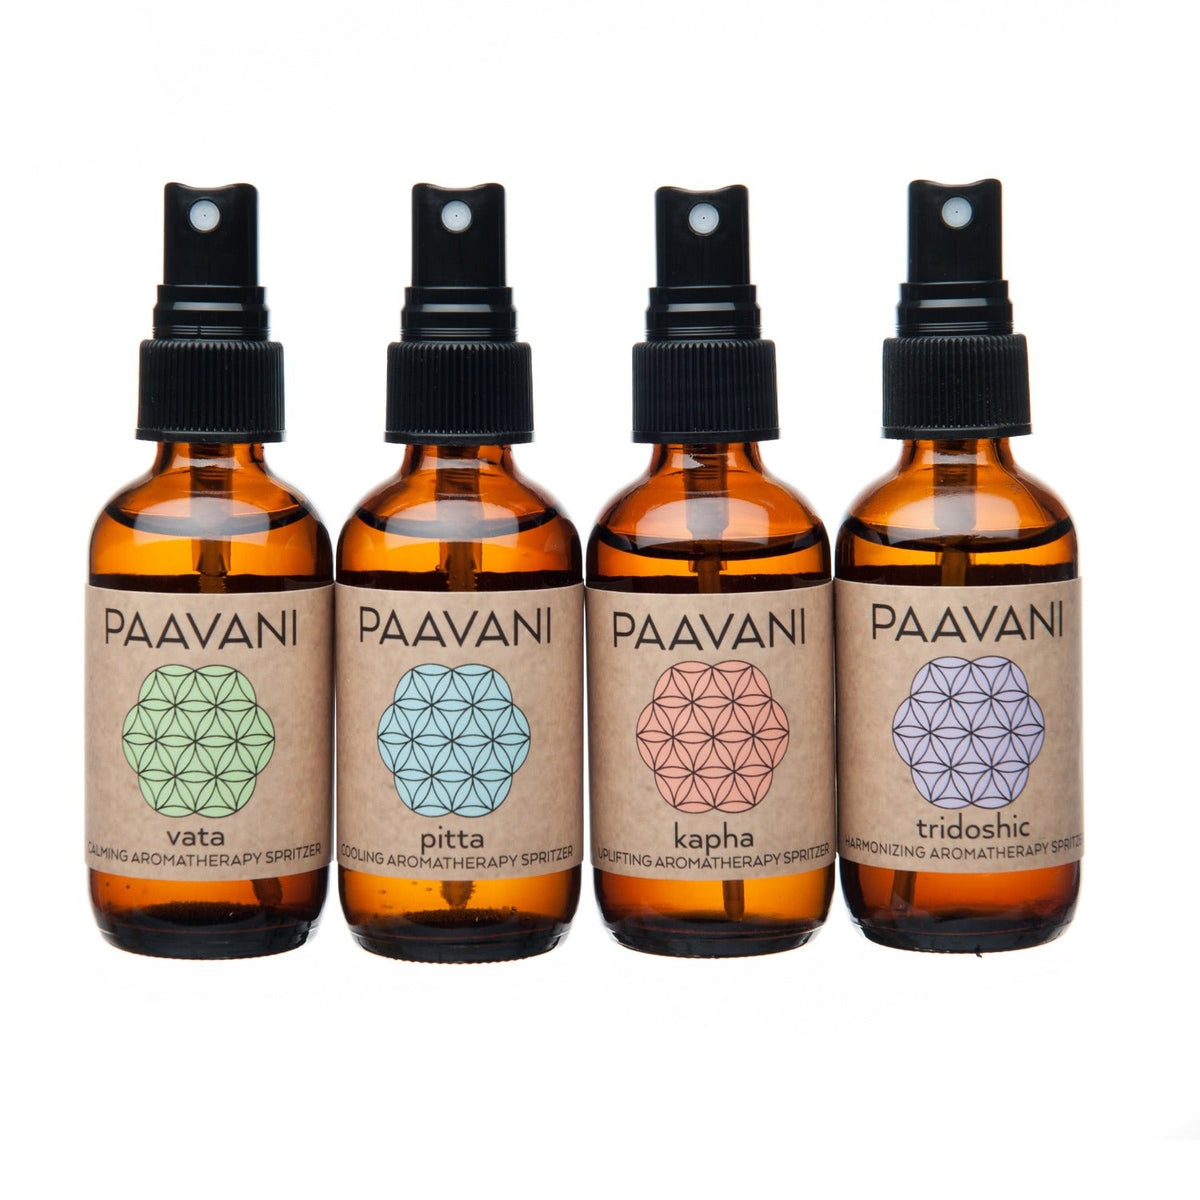 * Paavani Ayurveda - The Aromatherapy Ritual including Vata Spritzer, Pitta Spritzer, Kapha Spritzer and Tridoshic Spritzer, Ayurvedic Bundle-0